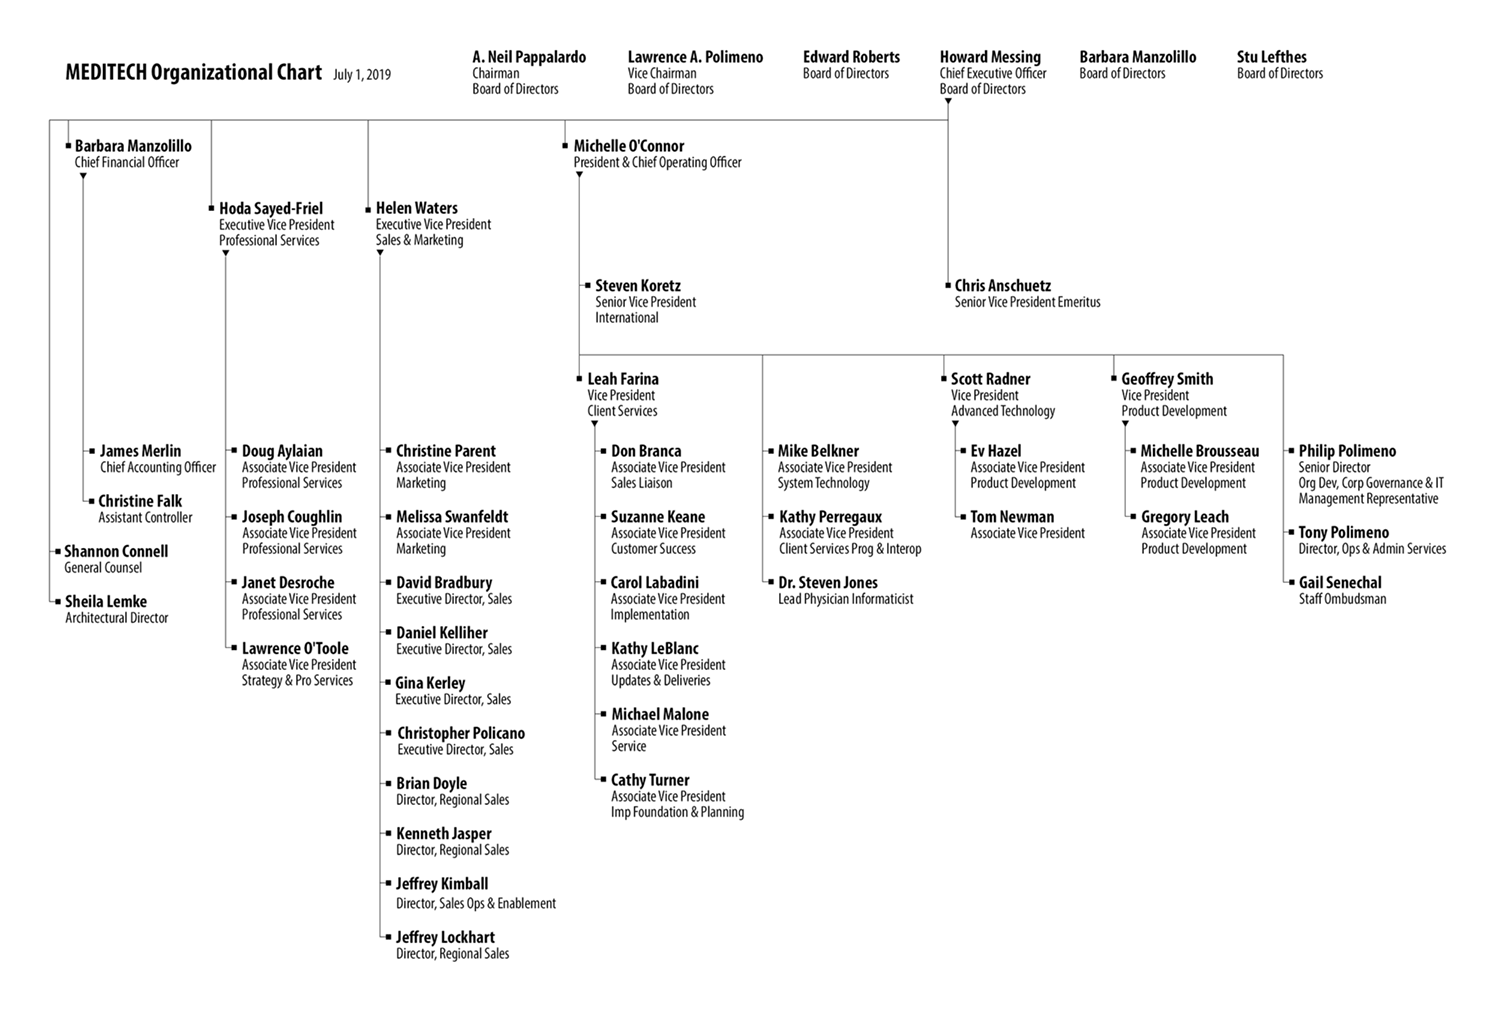 MEDITECH - Executive Org Chart